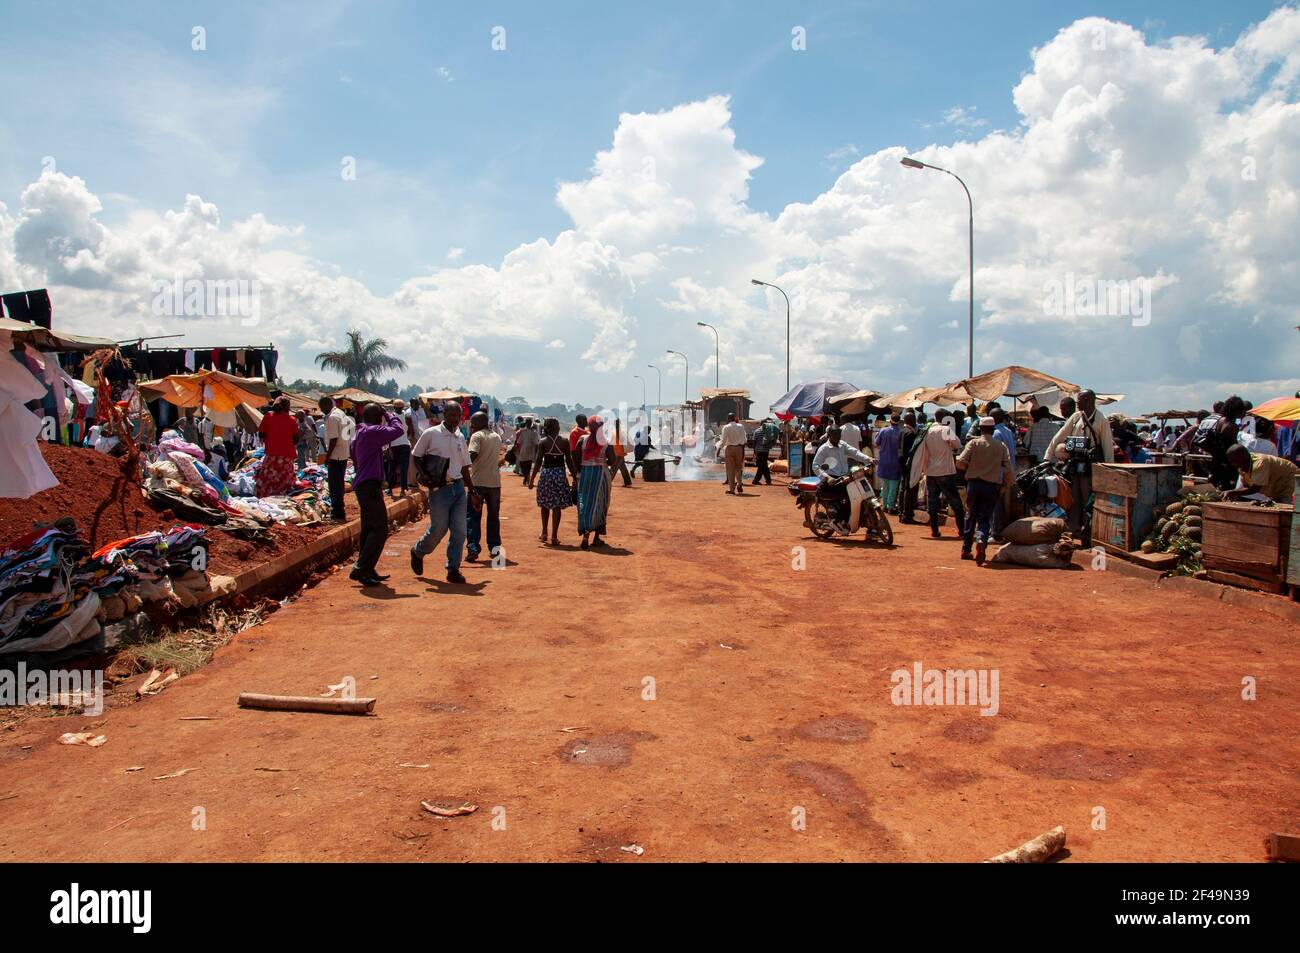 Marché en plein air à Ggaba Beach, Ouganda. Banque D'Images